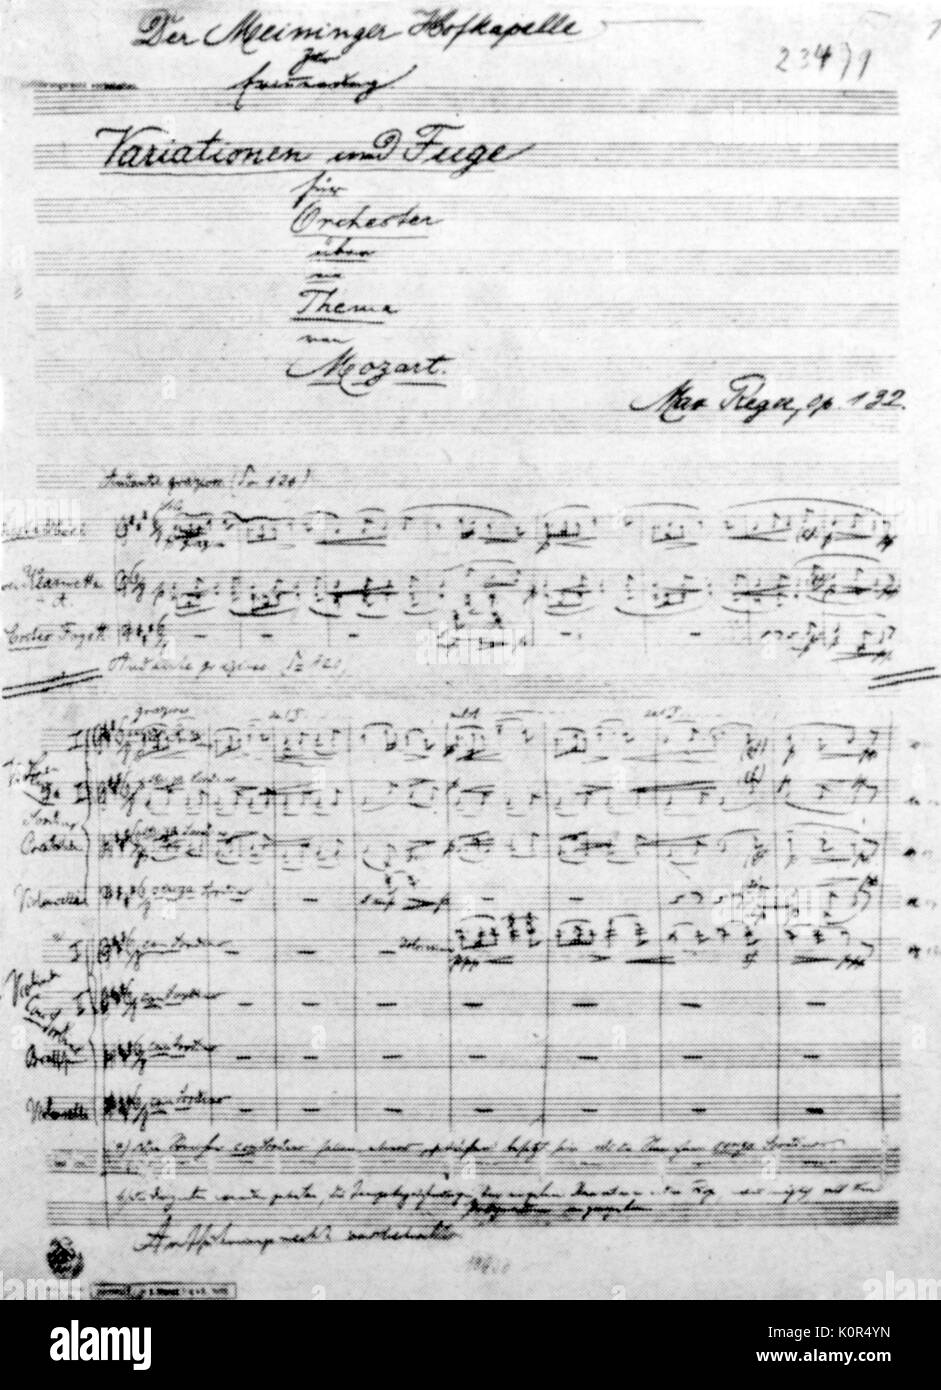 Nax Reger handwritten score- Variation on theme by Mozart 1914.  Mozart variation op.132, begun in May 1914 in Schneewinkl,completed June in Meiningen. German composer, 19 March 1873 - 11 May 1916. Stock Photo